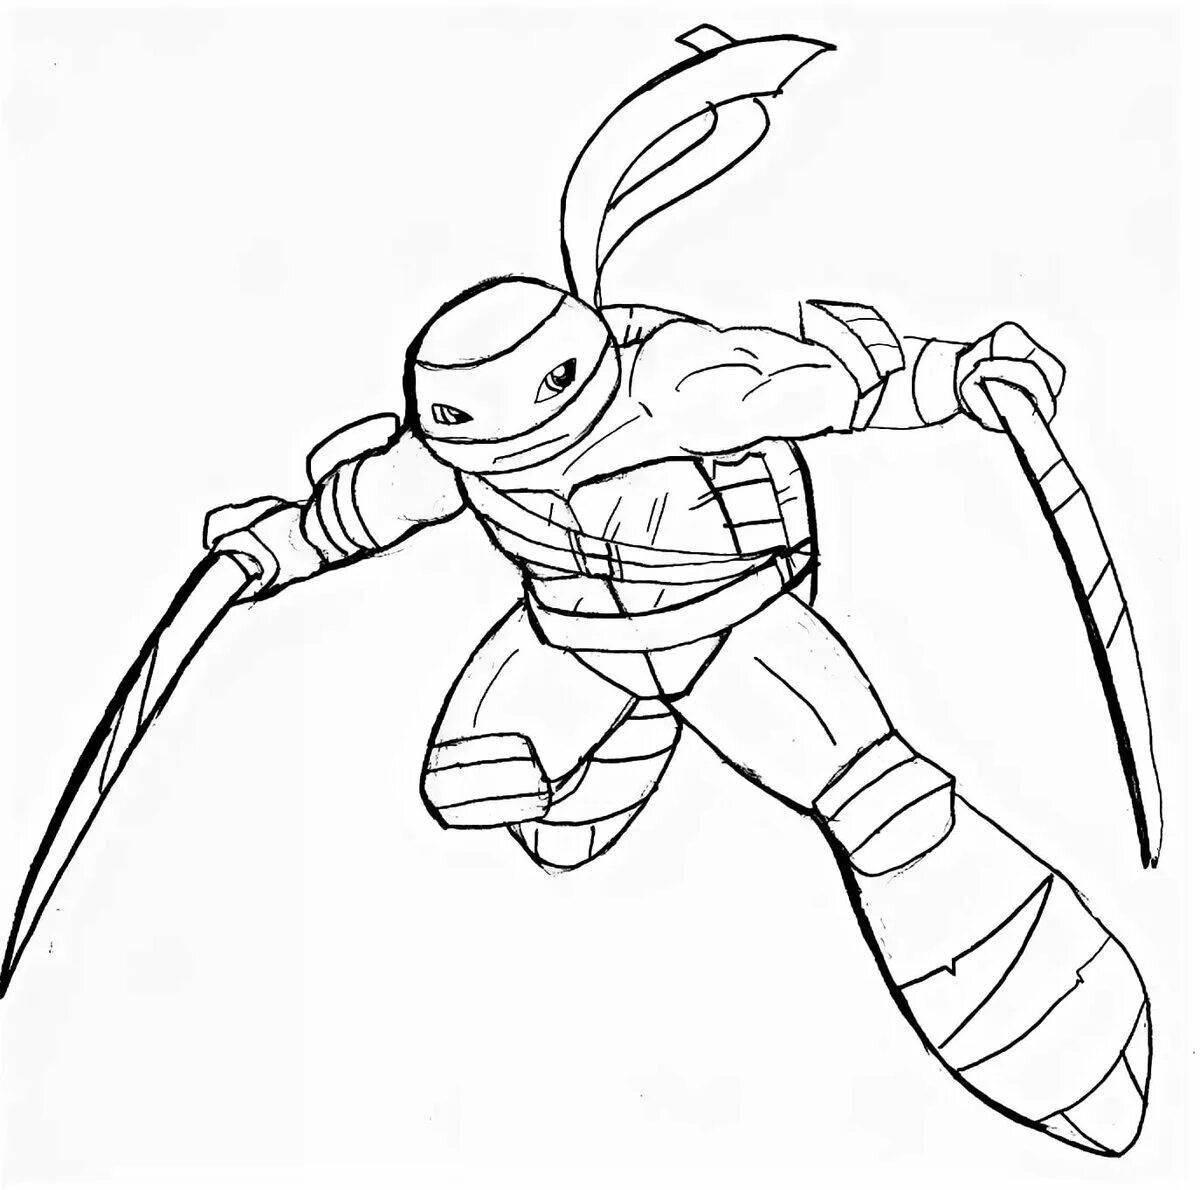 Amazing Teenage Mutant Ninja Turtles coloring page